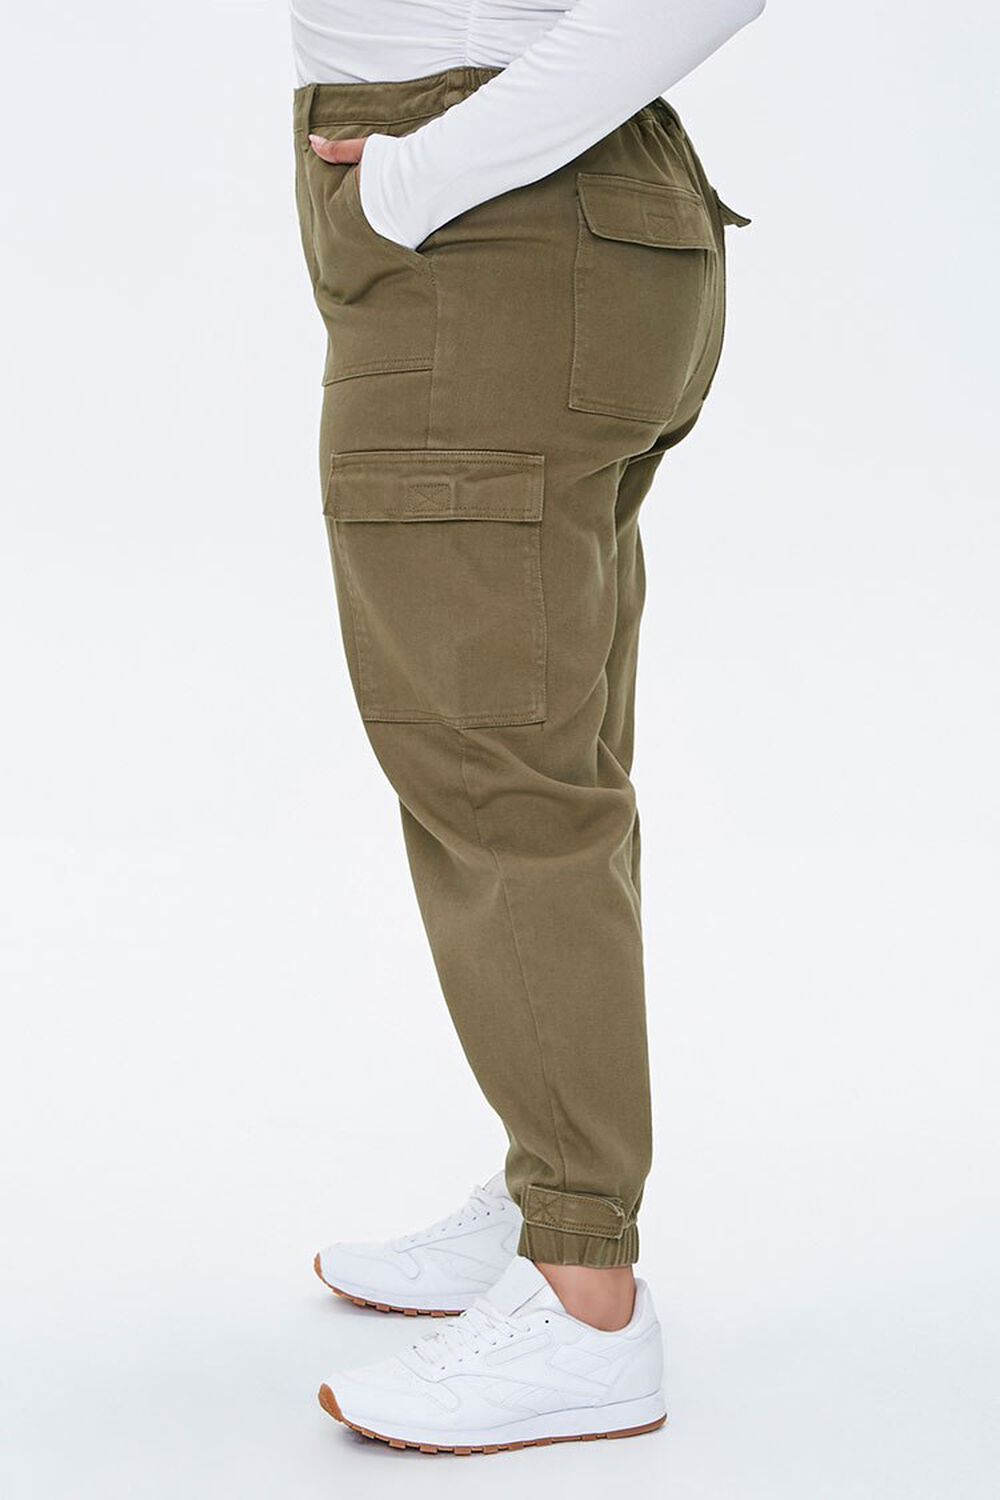 OLIVE Plus Size Ankle-Cut Cargo Pants, image 3